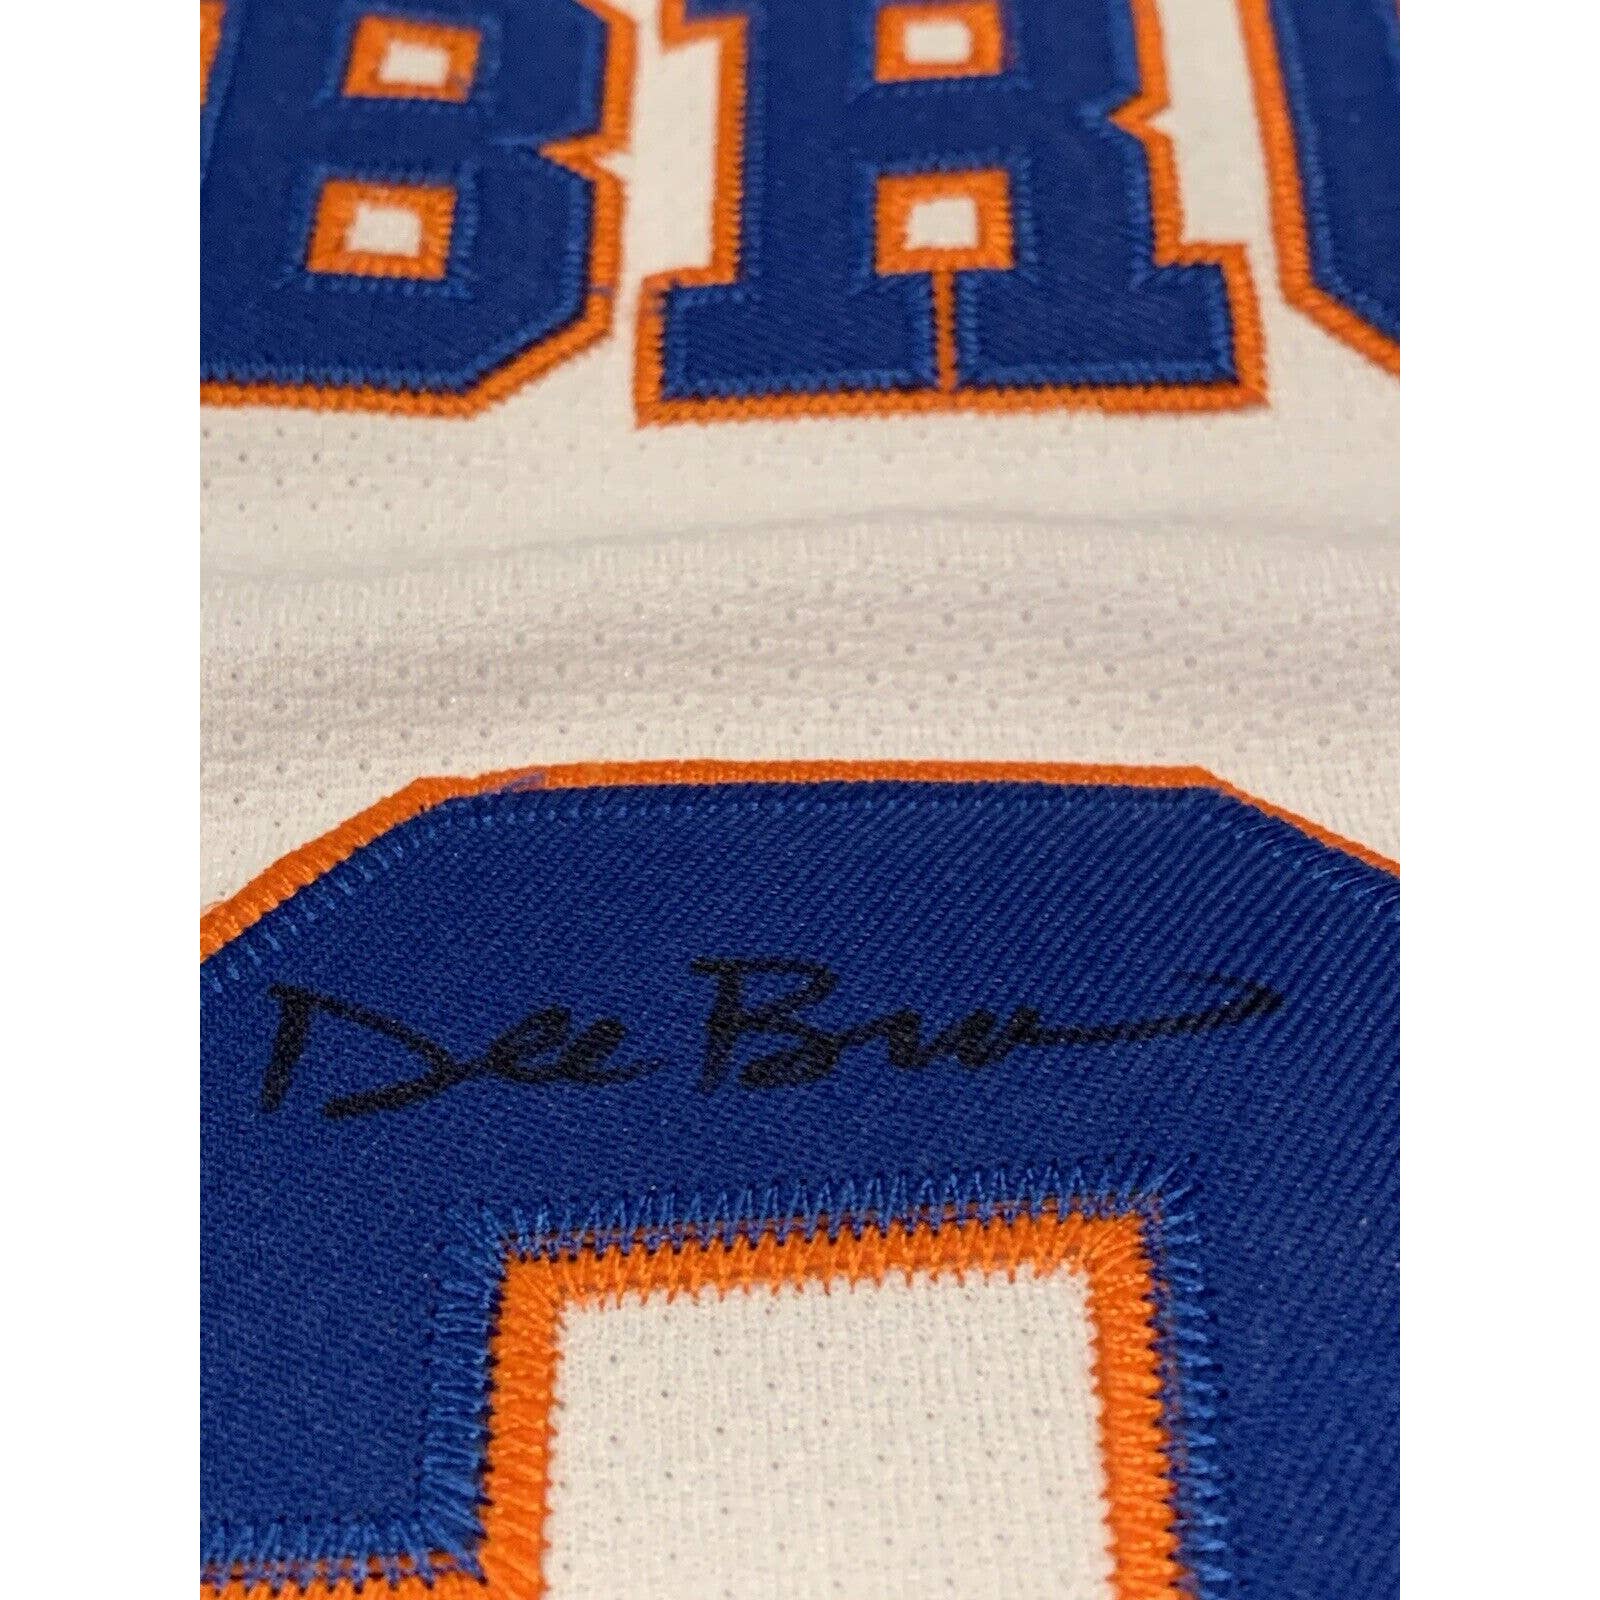 Dee Brown Autographed/Signed Jersey PSA/DNA Celtics Slam Dunk Champ Bolles - TreasuresEvolved